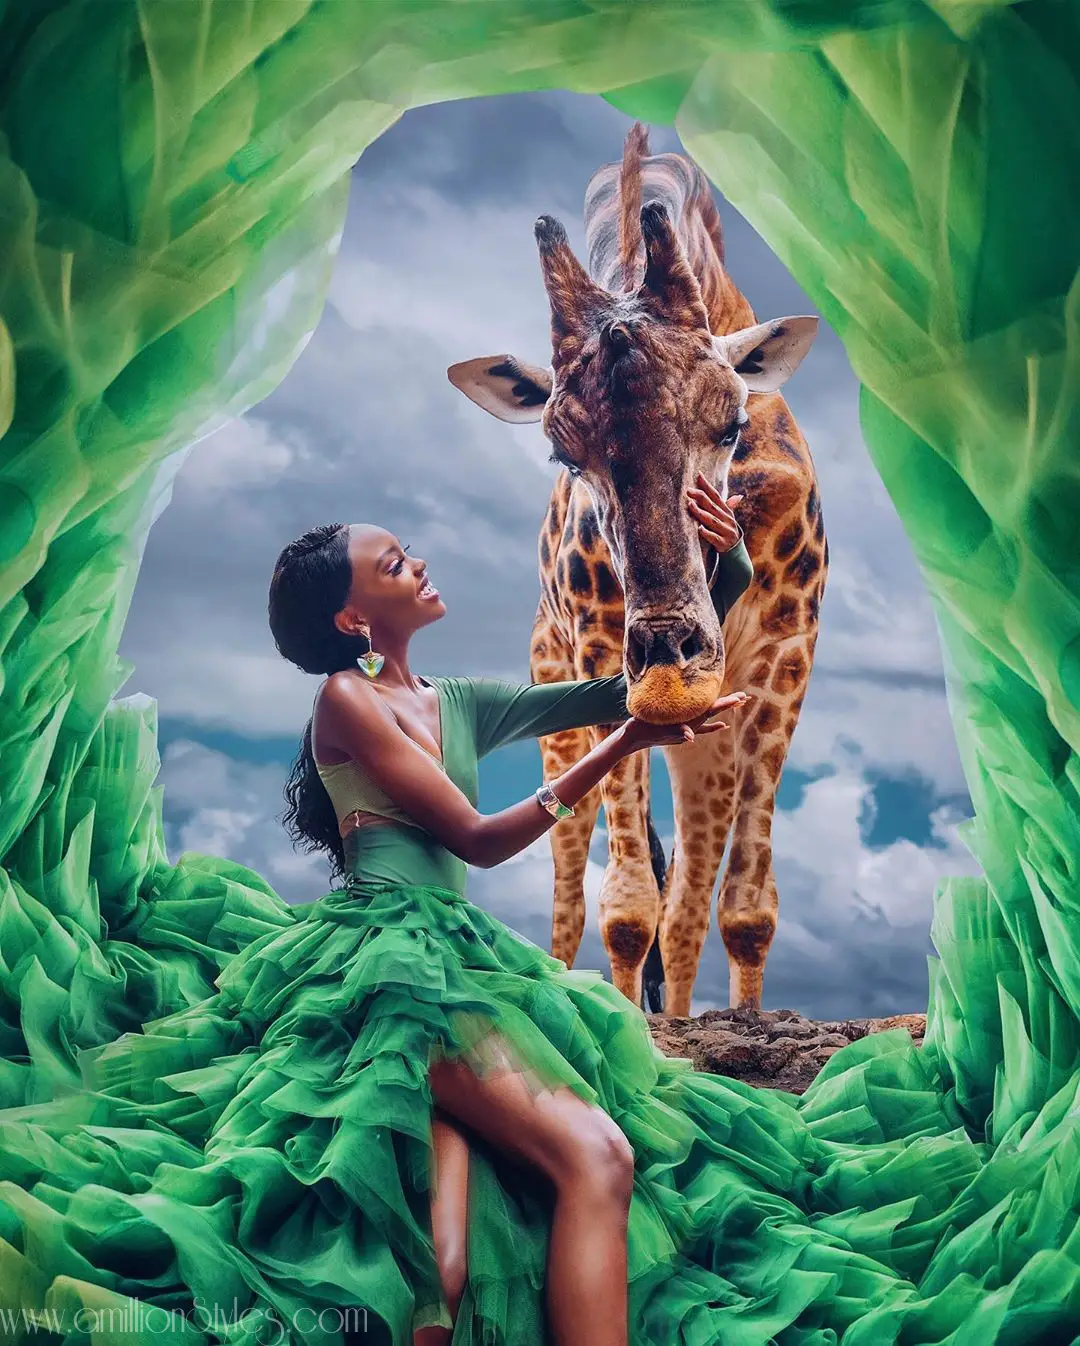 Miss Kenya 2019 Looking Fabulous In This Wildlife Photoshoot